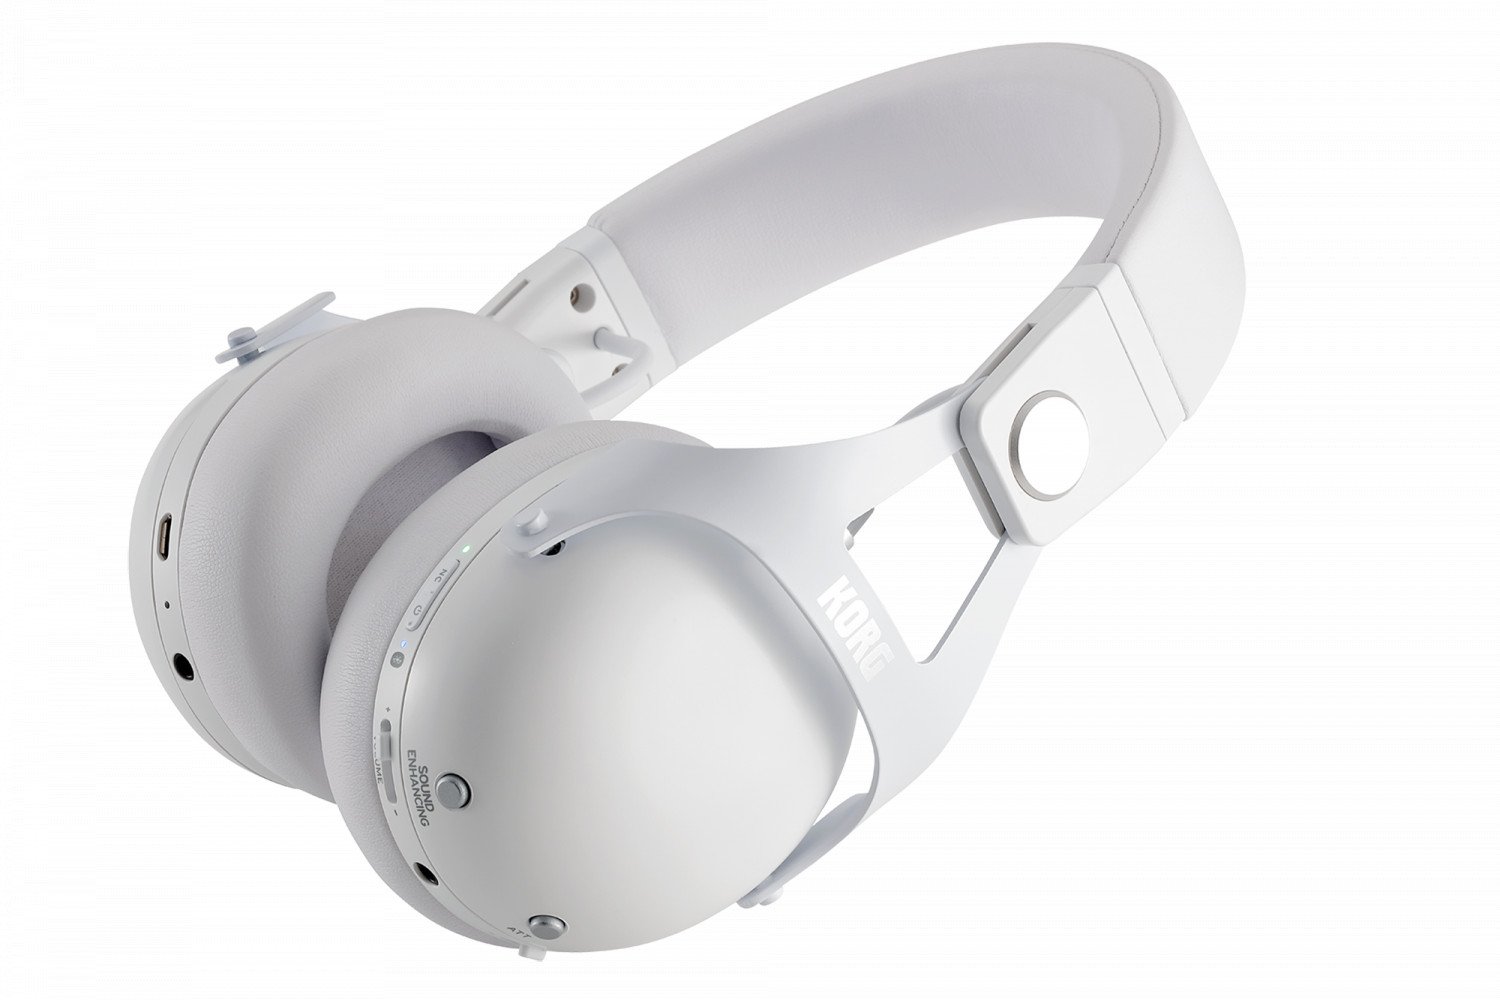 Korg NC-Q1 Smart Noise Cancelling DJ Headphones